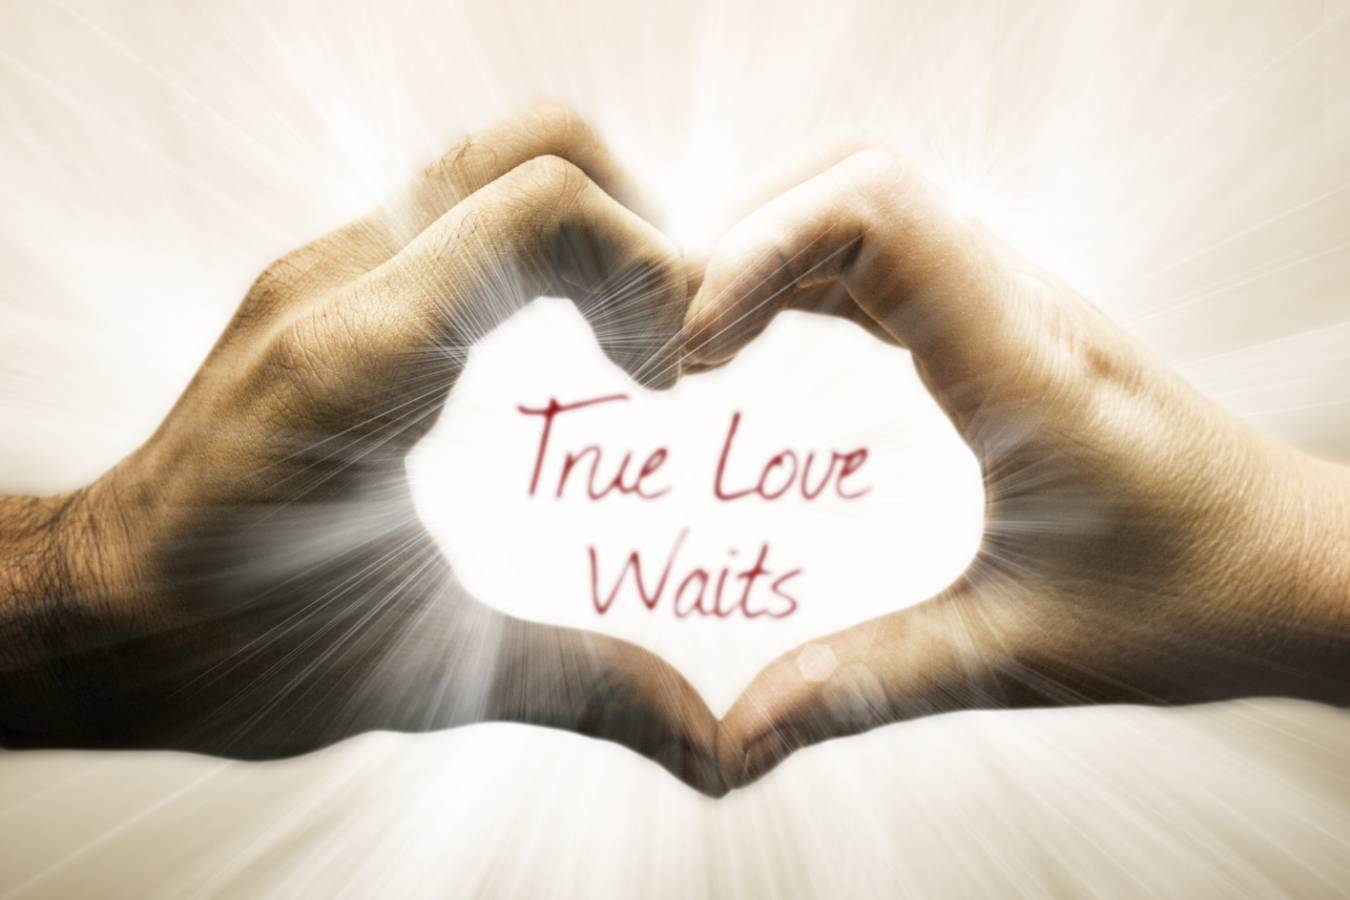 True Love Waits